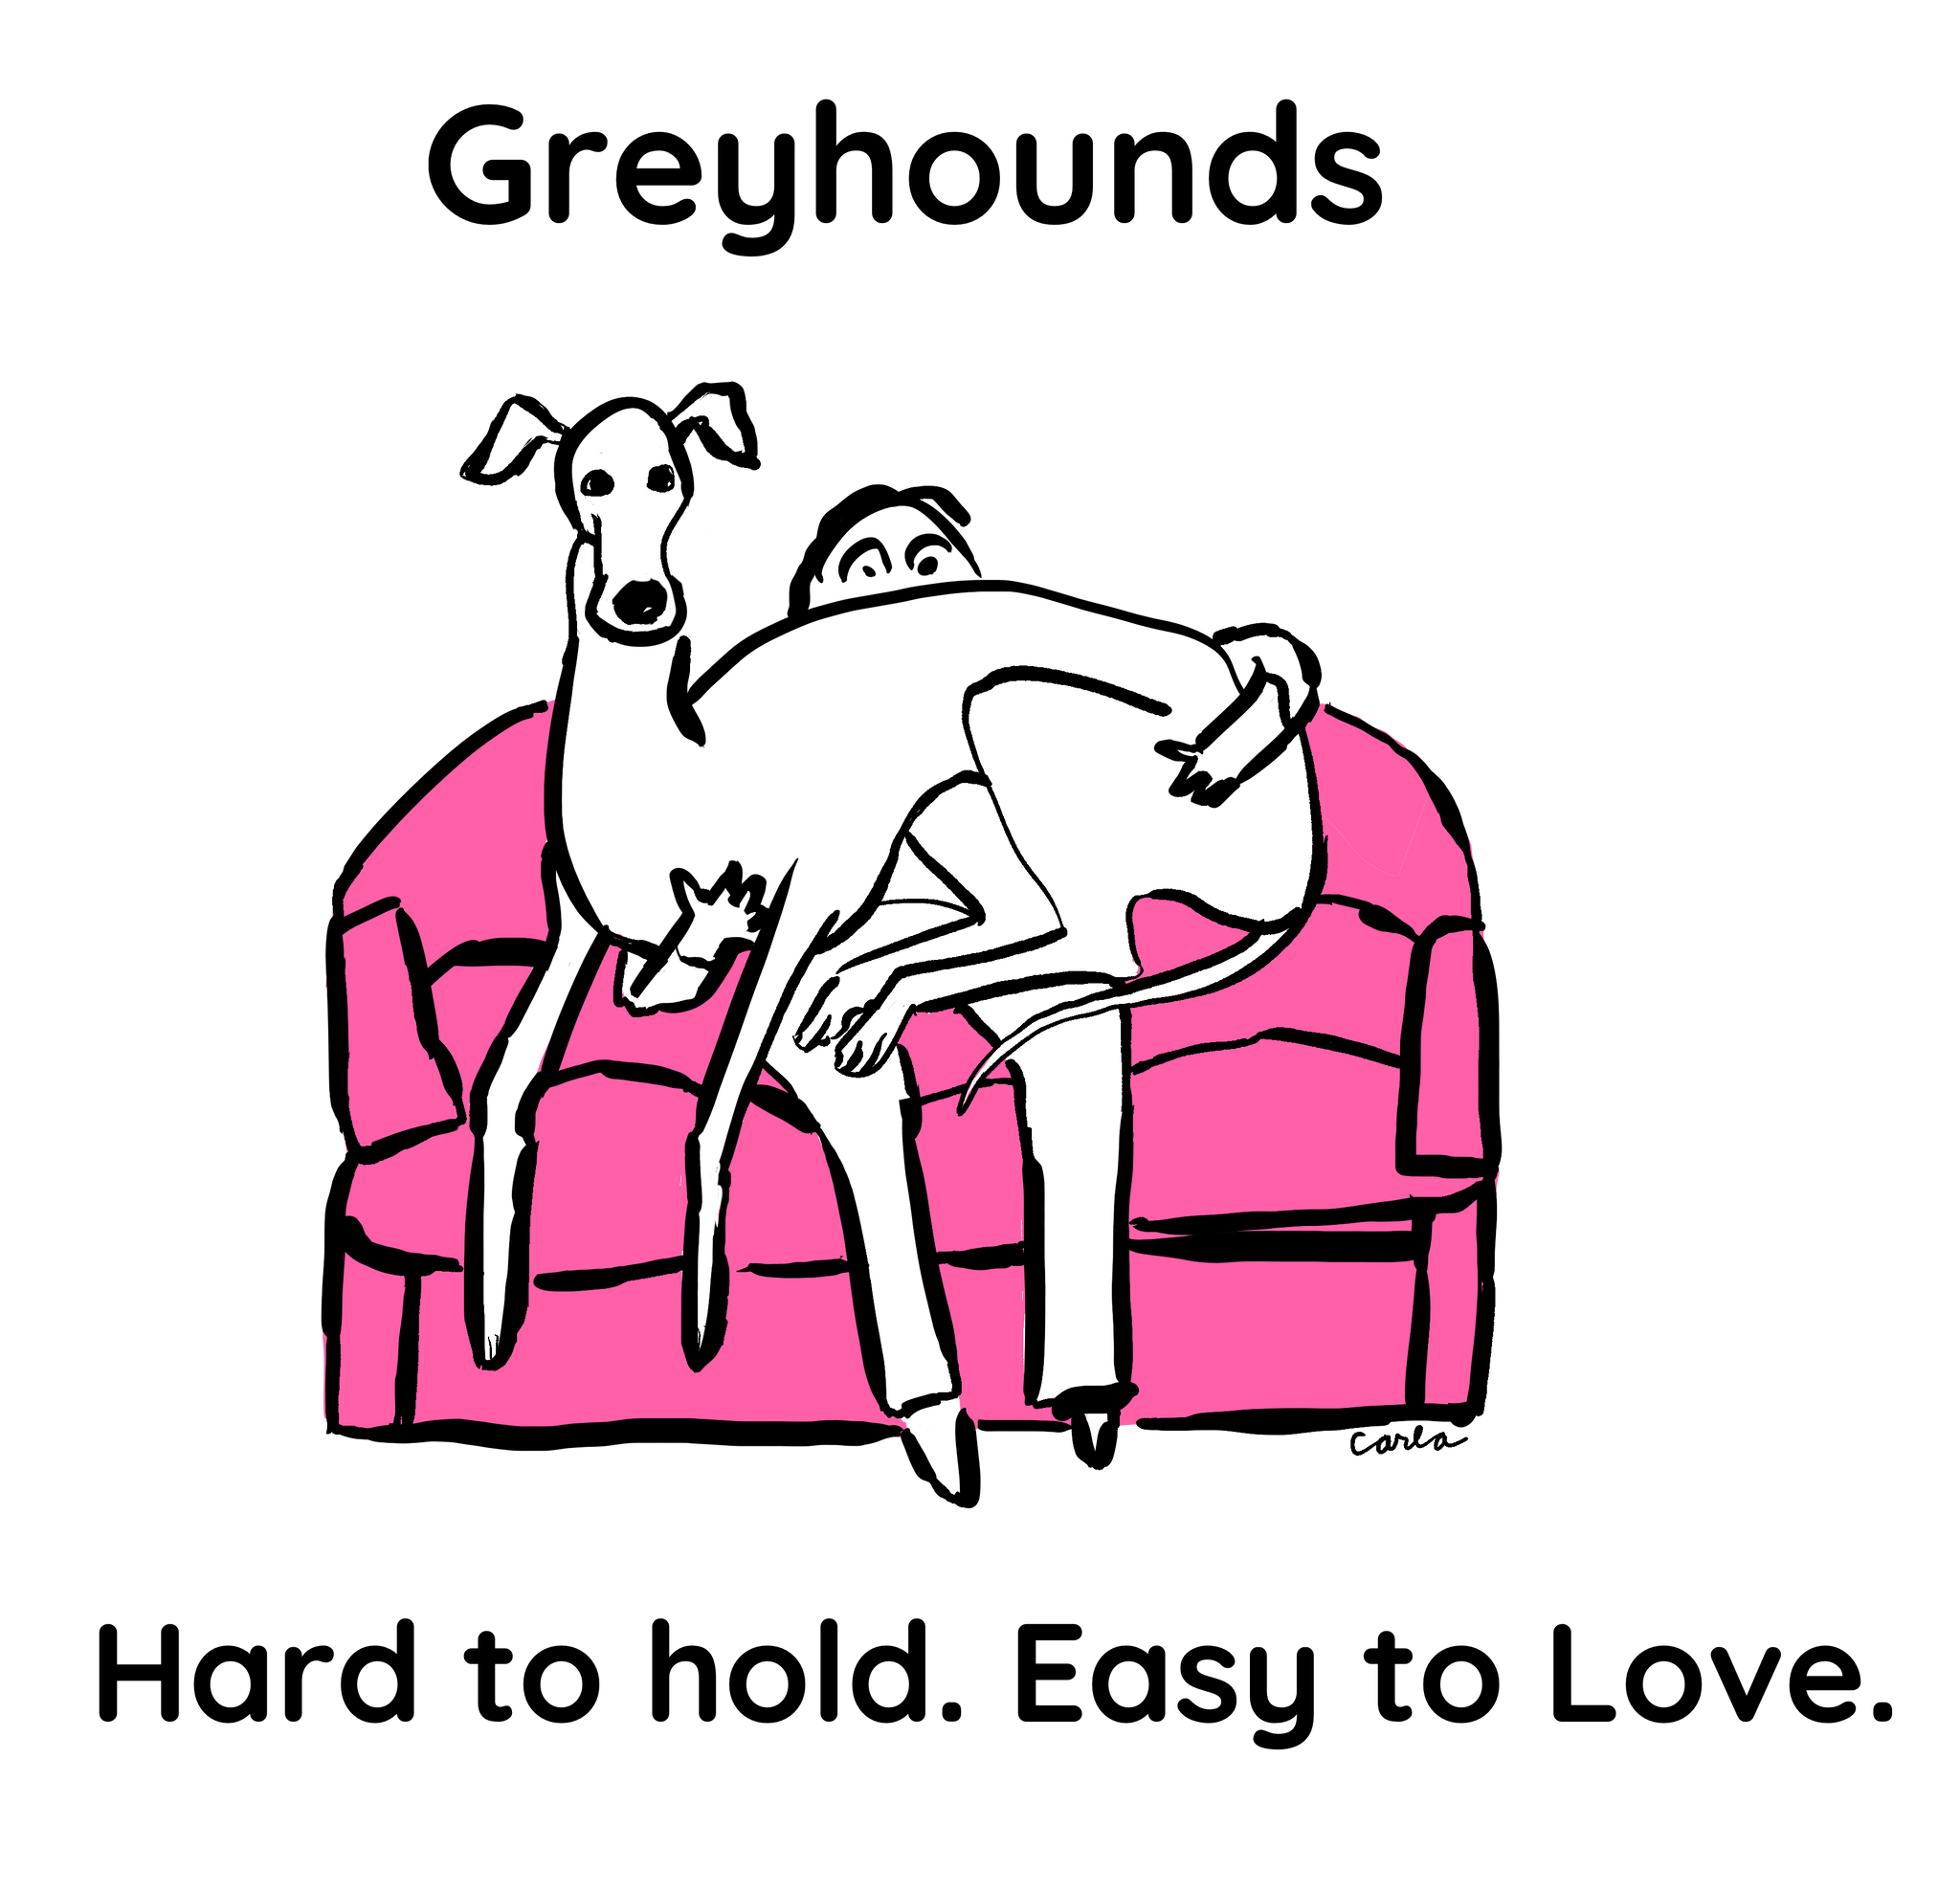 Greyhound dog breed sitting on lap by Carla Miler Art